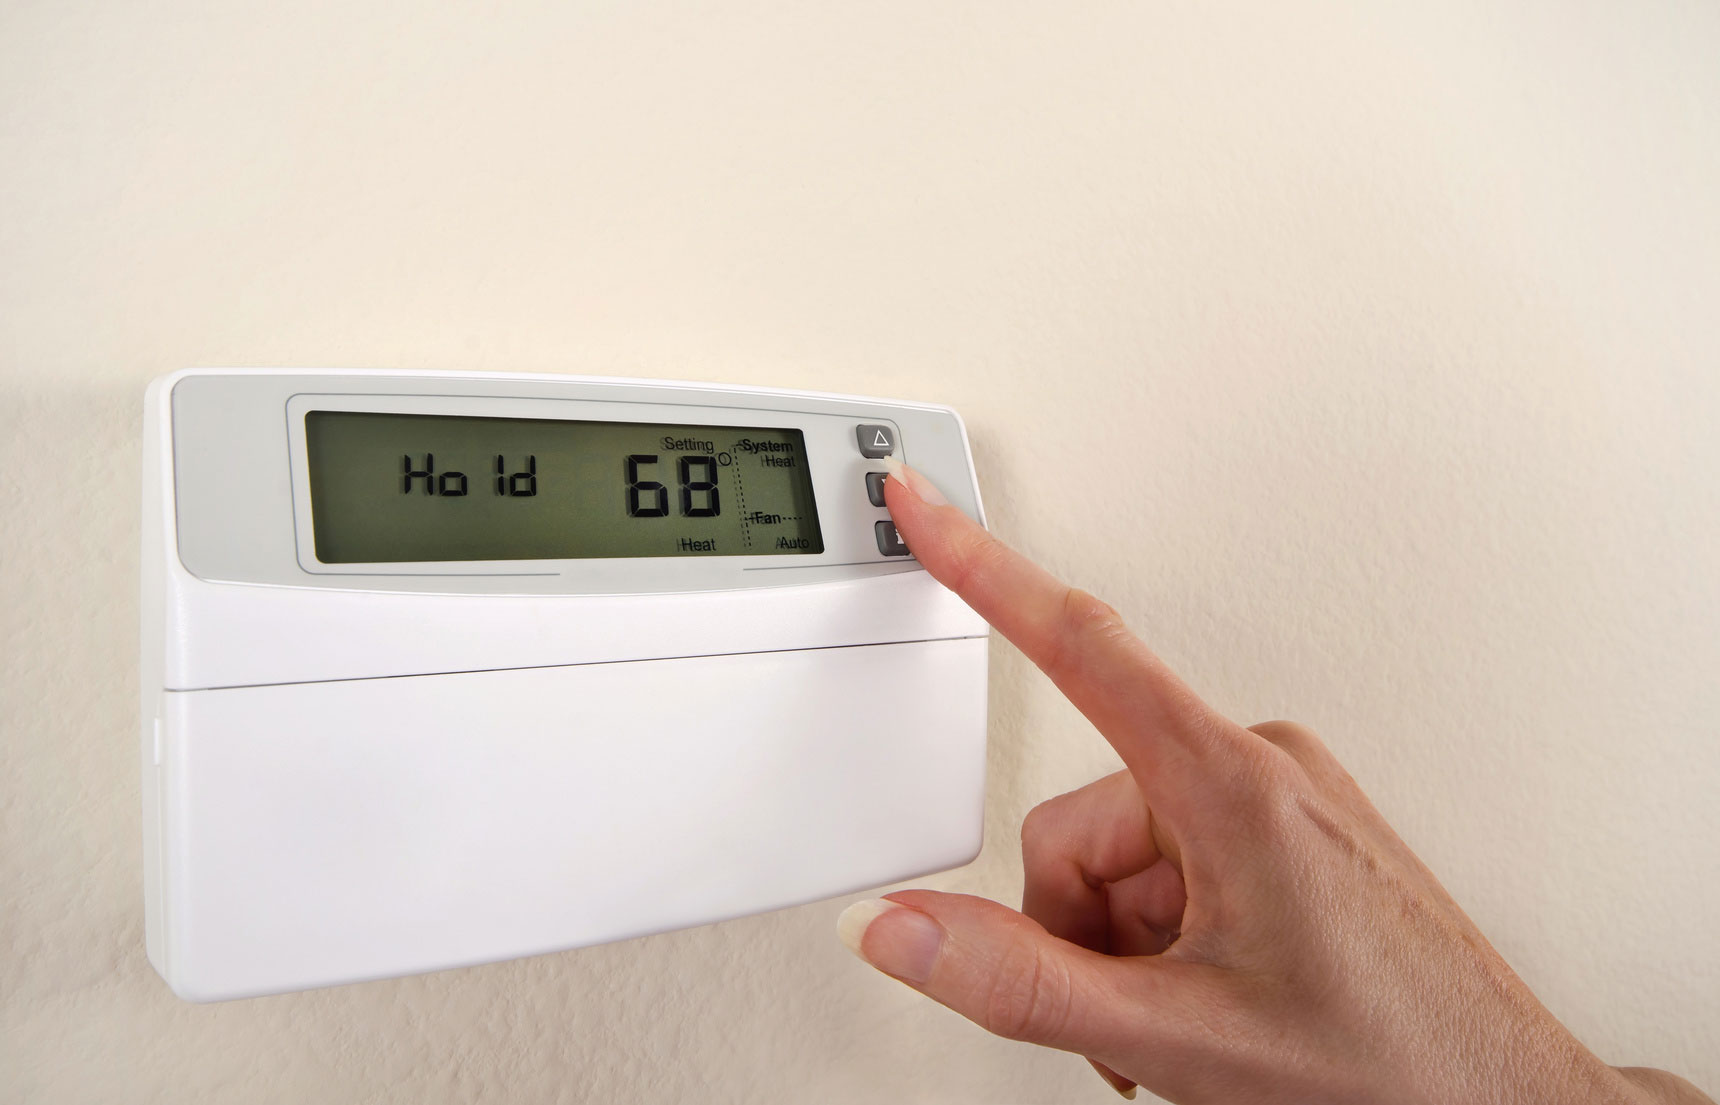 Del Rio home heating thermostat